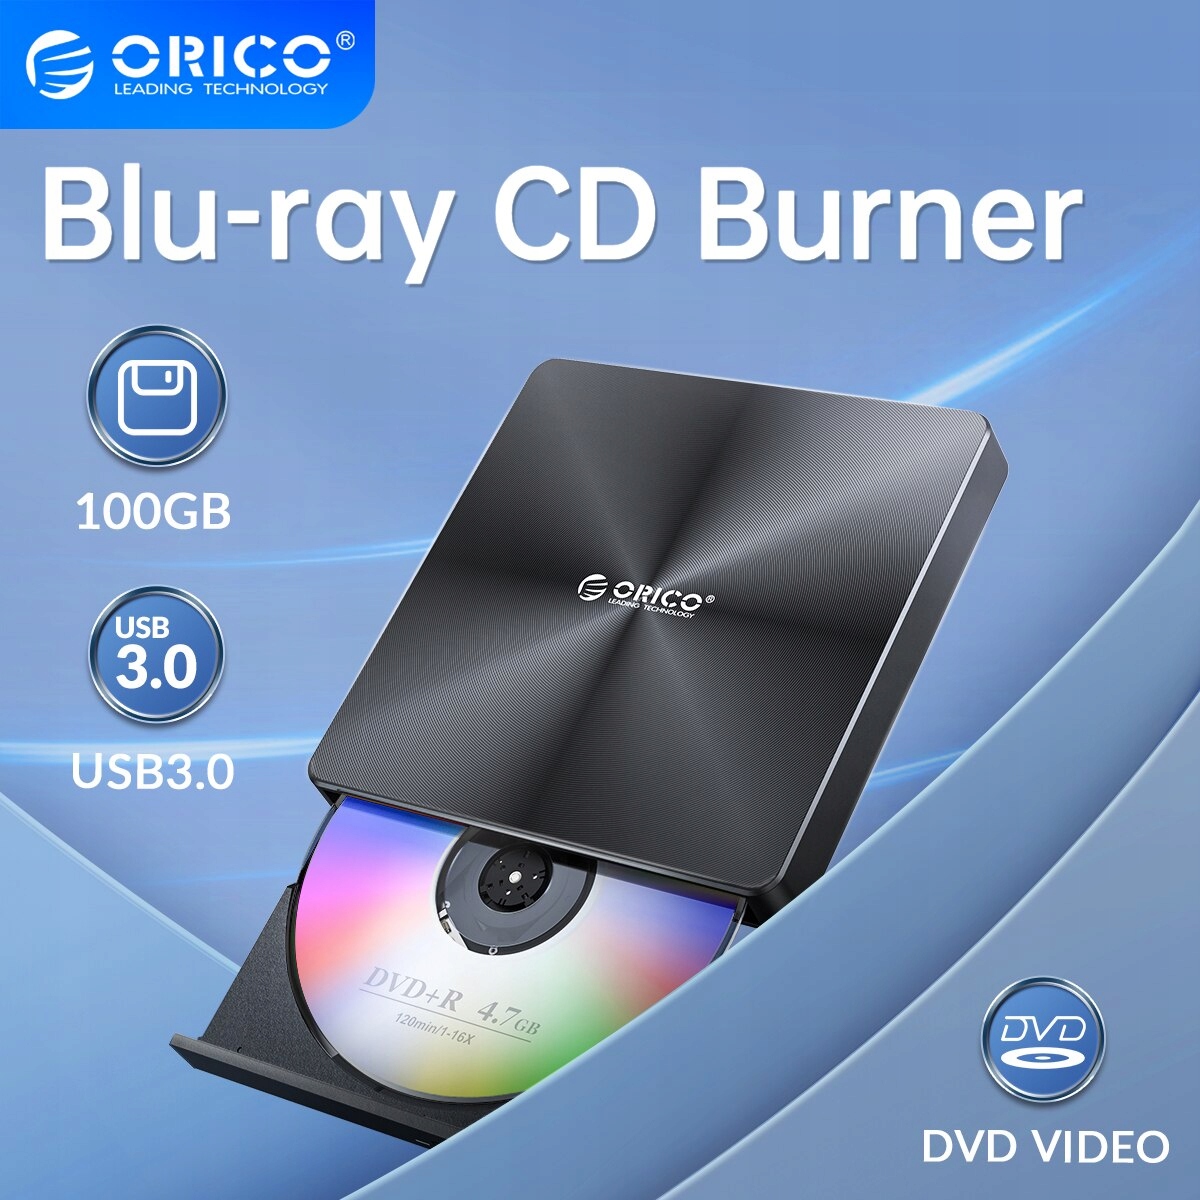 100Gb Blu-ray портативный CD-плеер BD Play вес продукта с упаковкой 1 кг